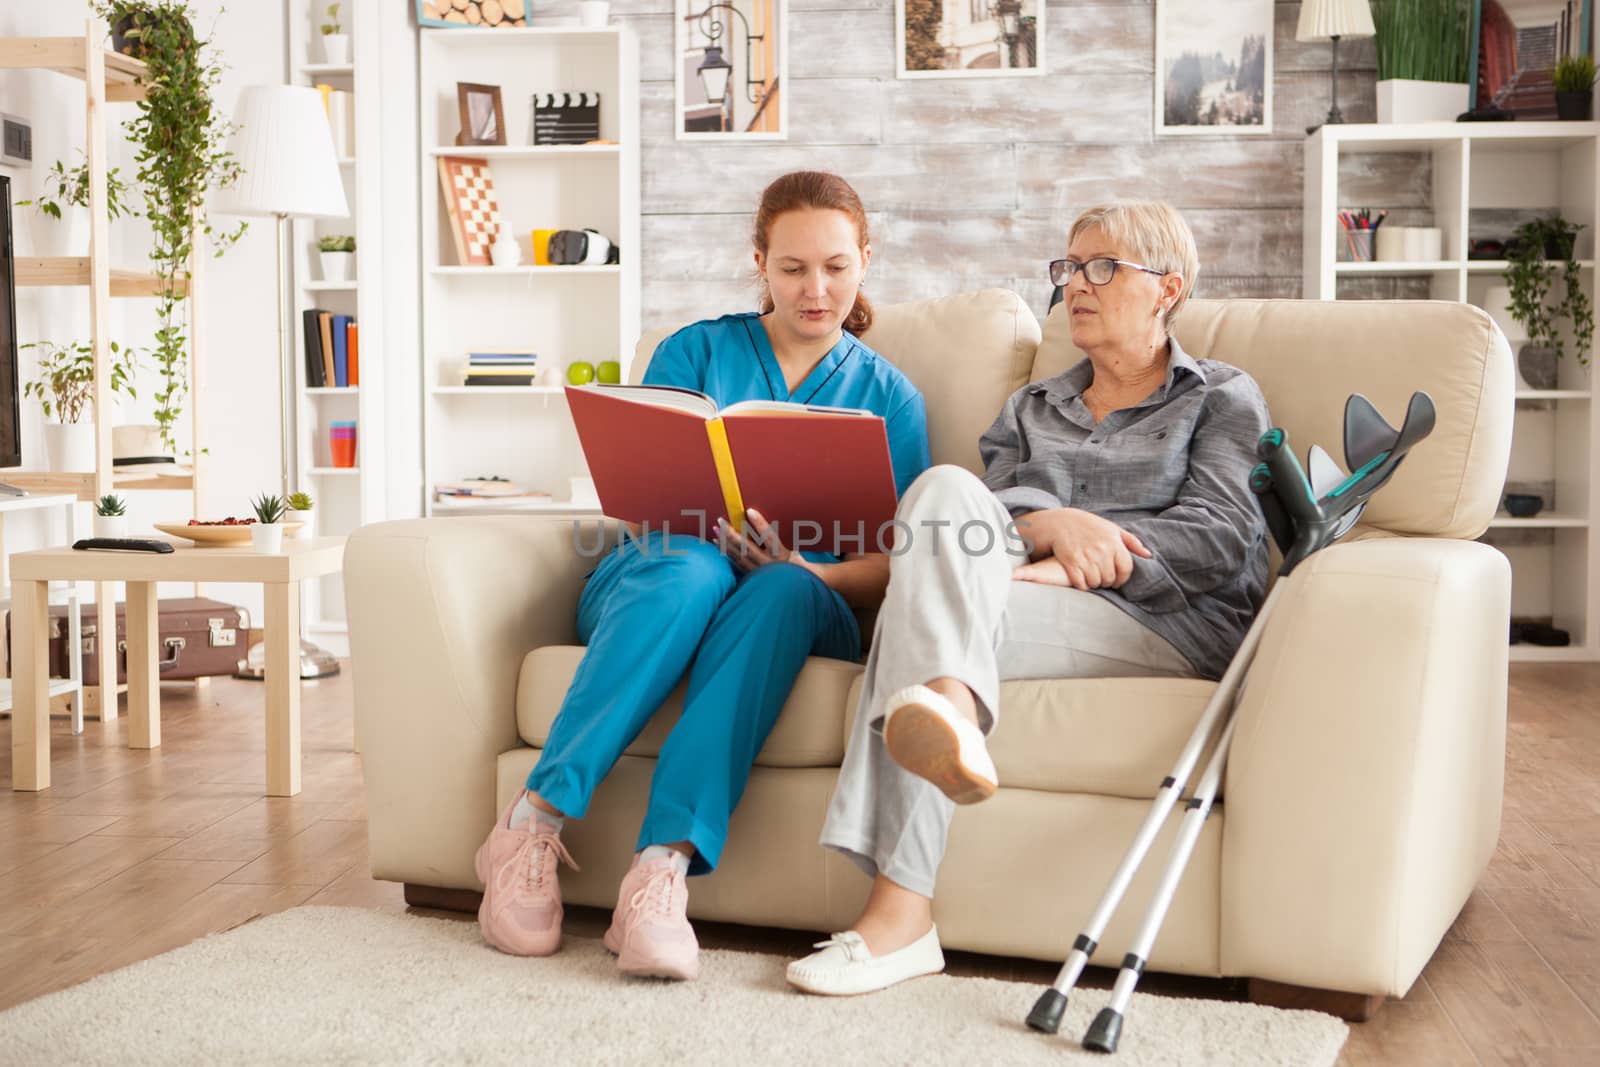 Nurse woman reading a book on nursing home by DCStudio